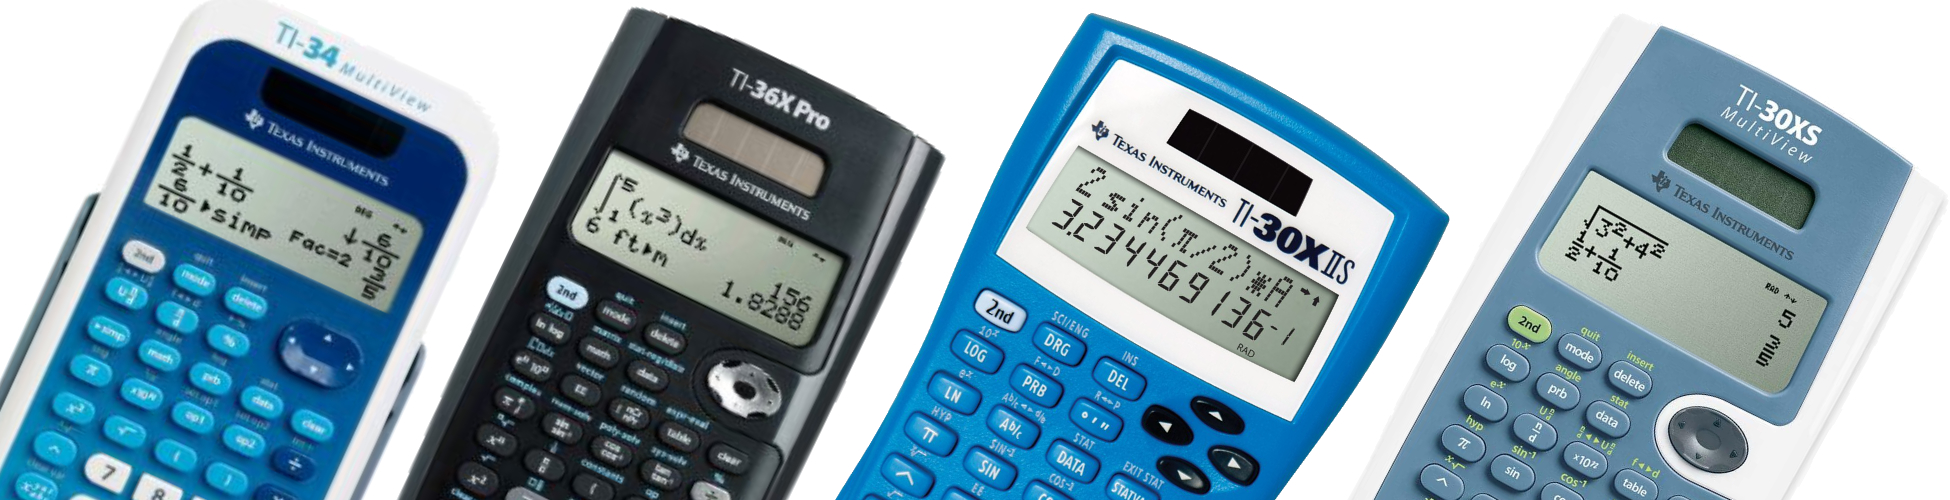 Texas Instruments scientific calculator tutorials